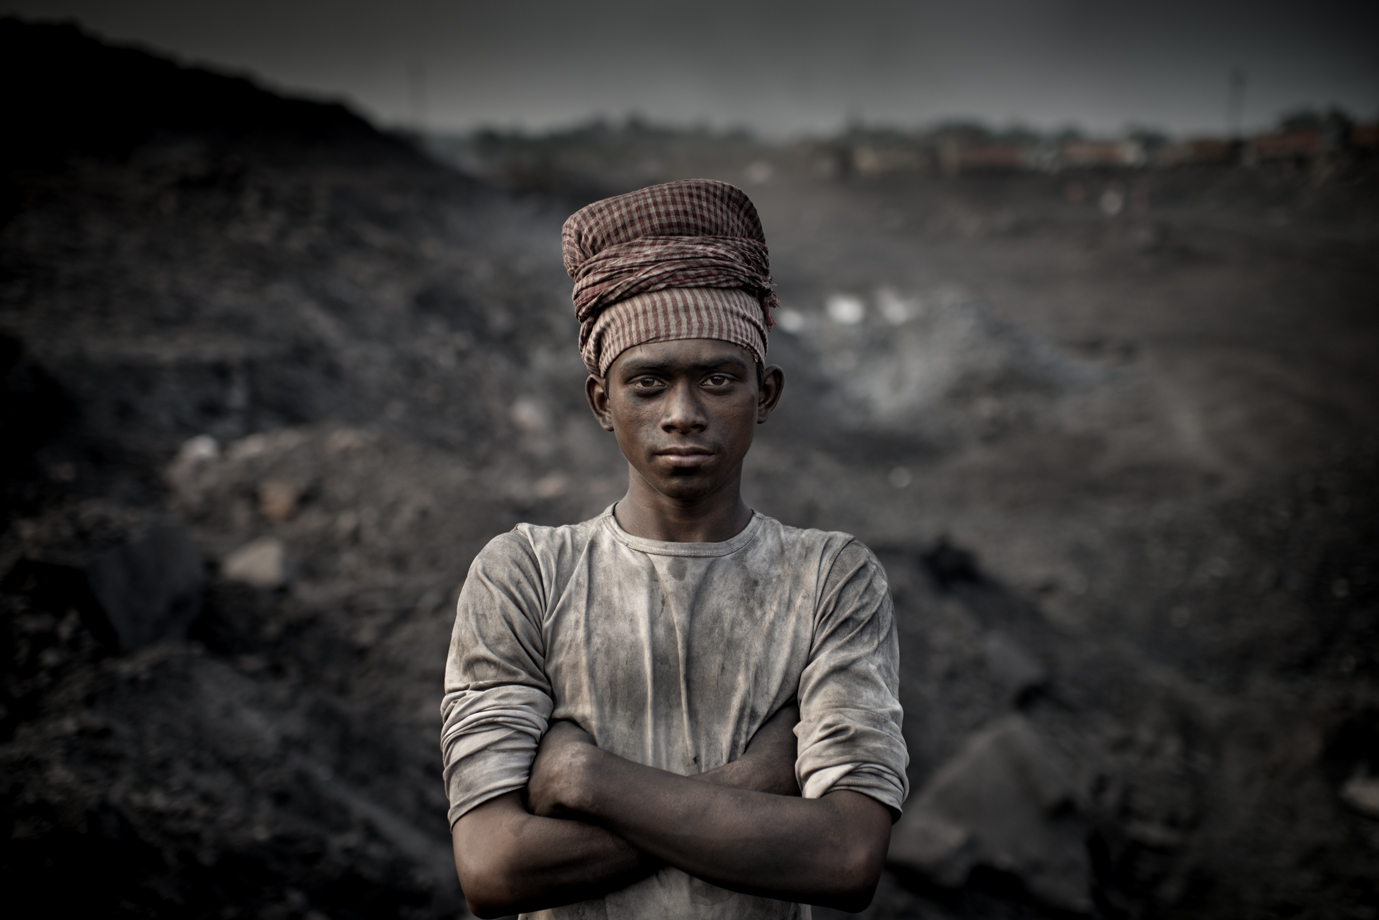  Coal miner, Jharkhand / India 